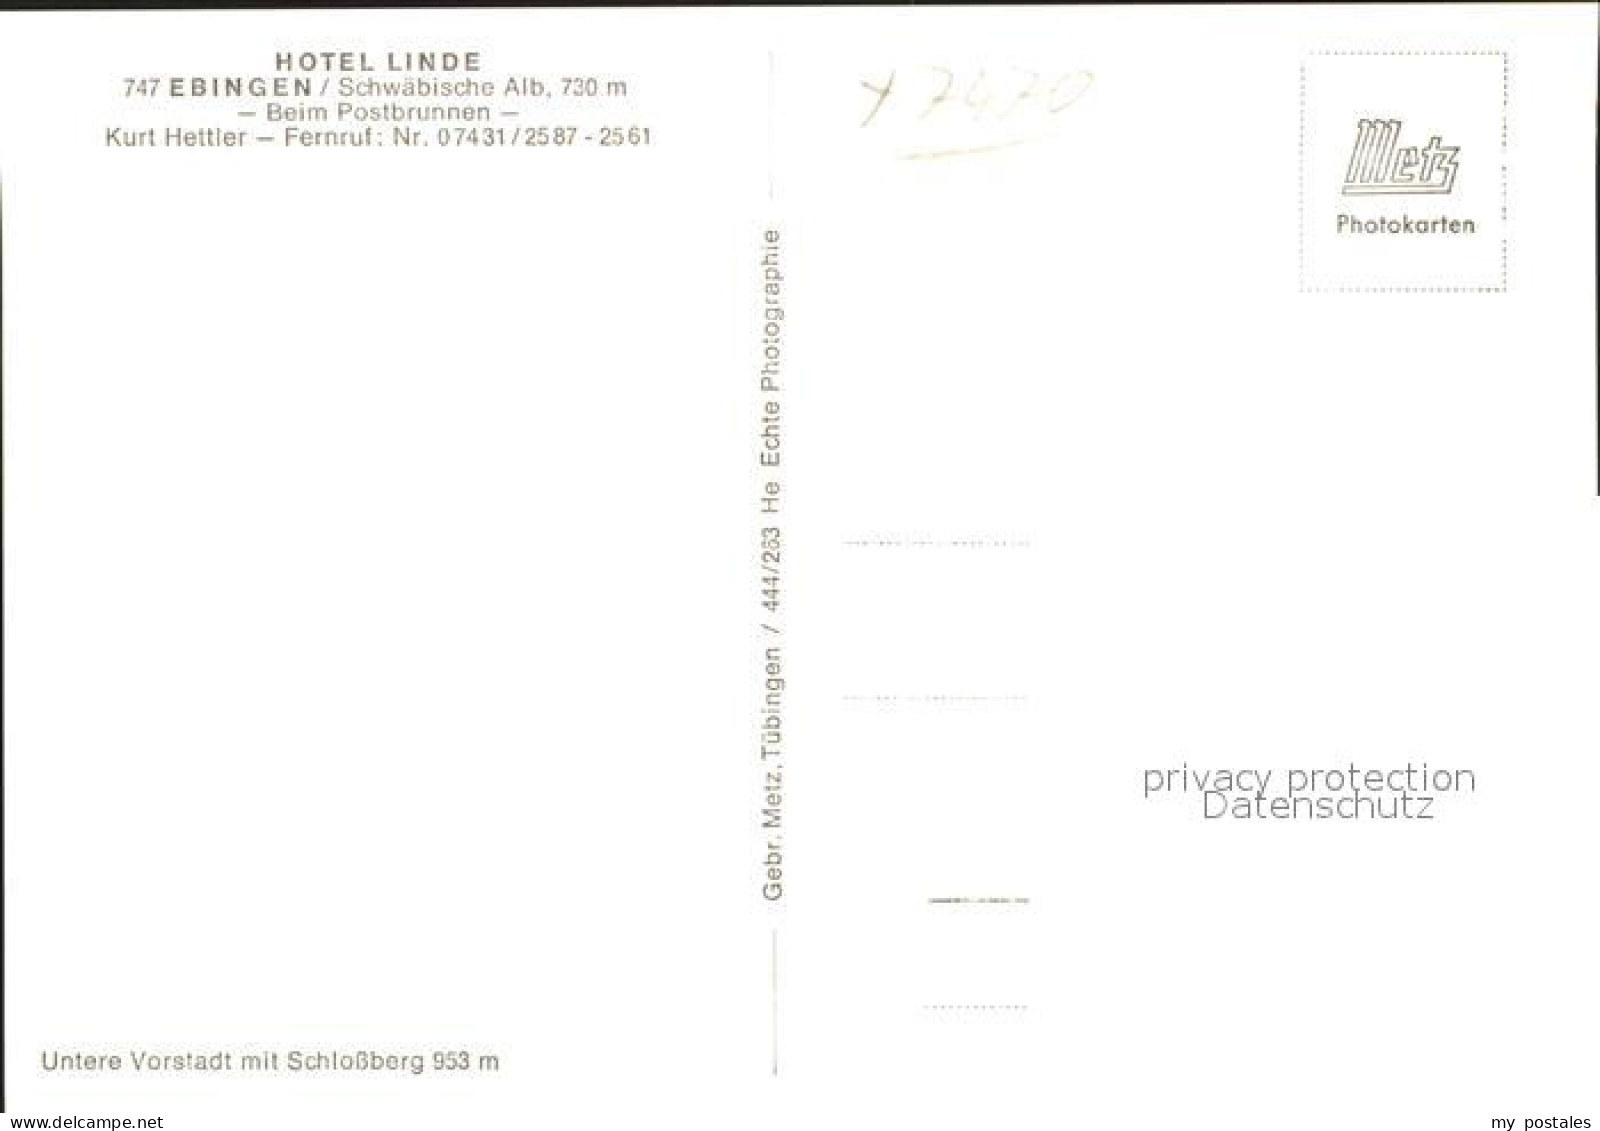 41760793 Ebingen Hote Linde Fachwerkhaeuser Bei Postbrunnen Ebingen - Albstadt